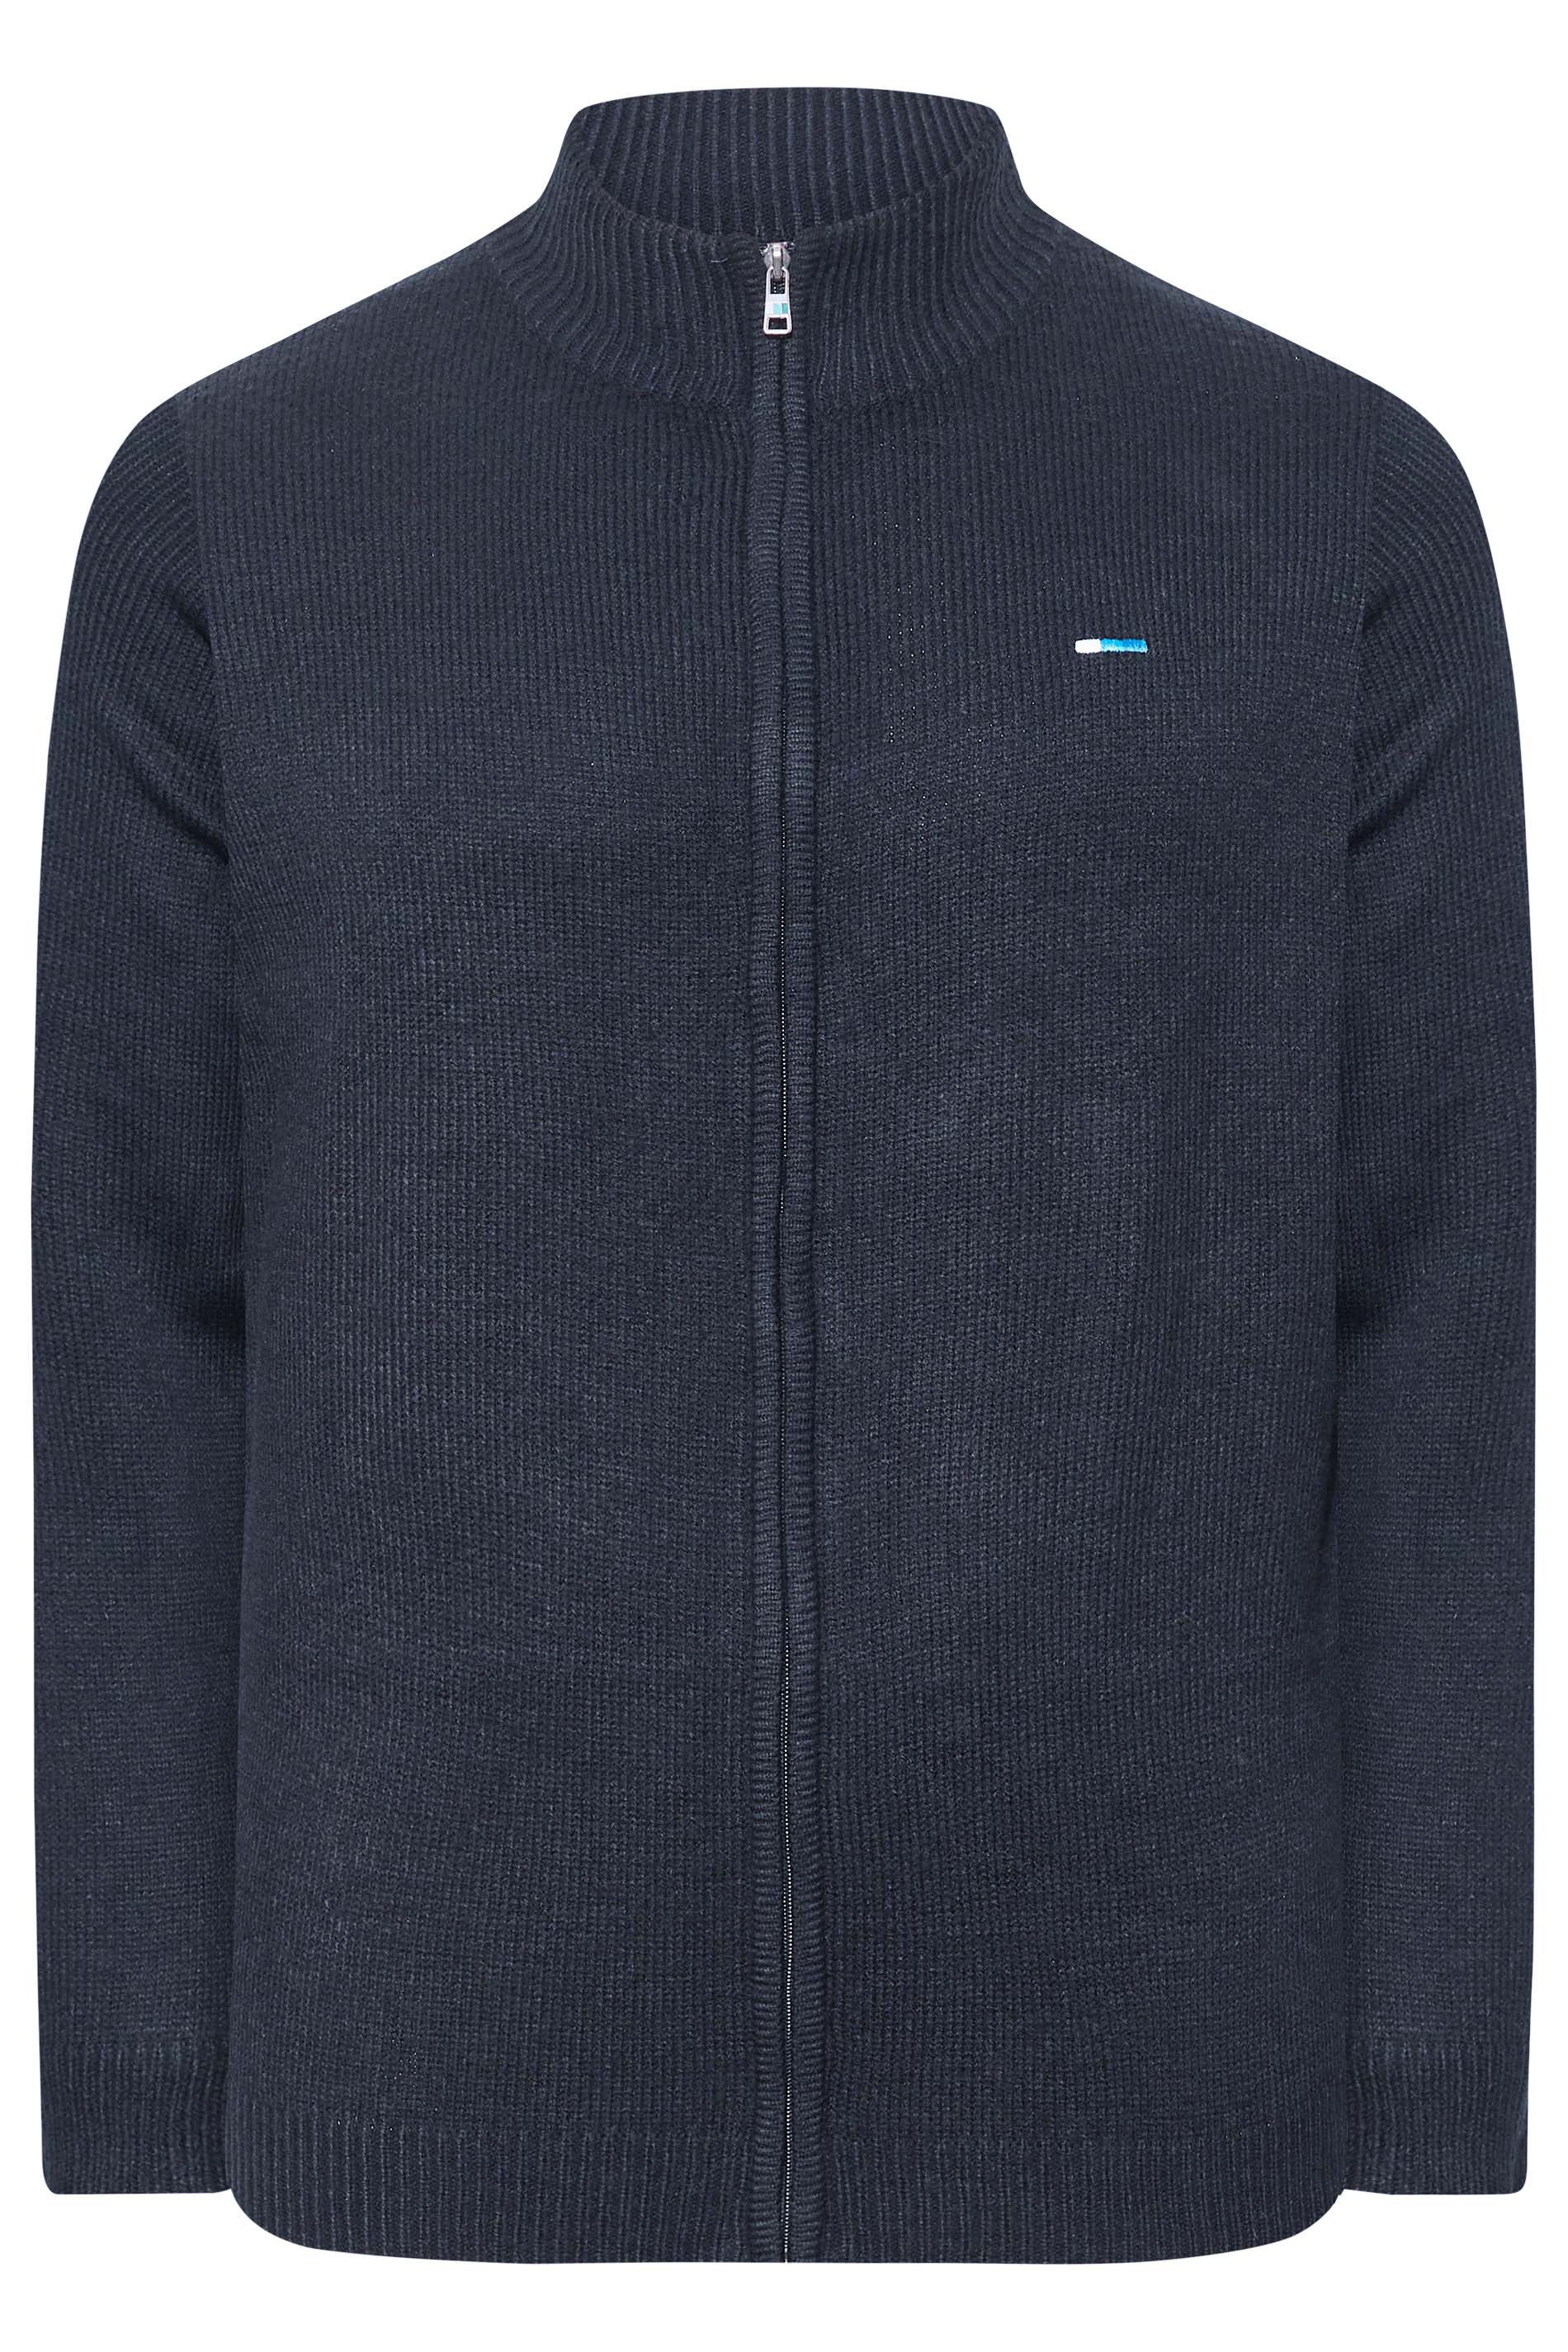 BadRhino Navy Blue Essential Full Zip Knitted Jumper | BadRhino 2